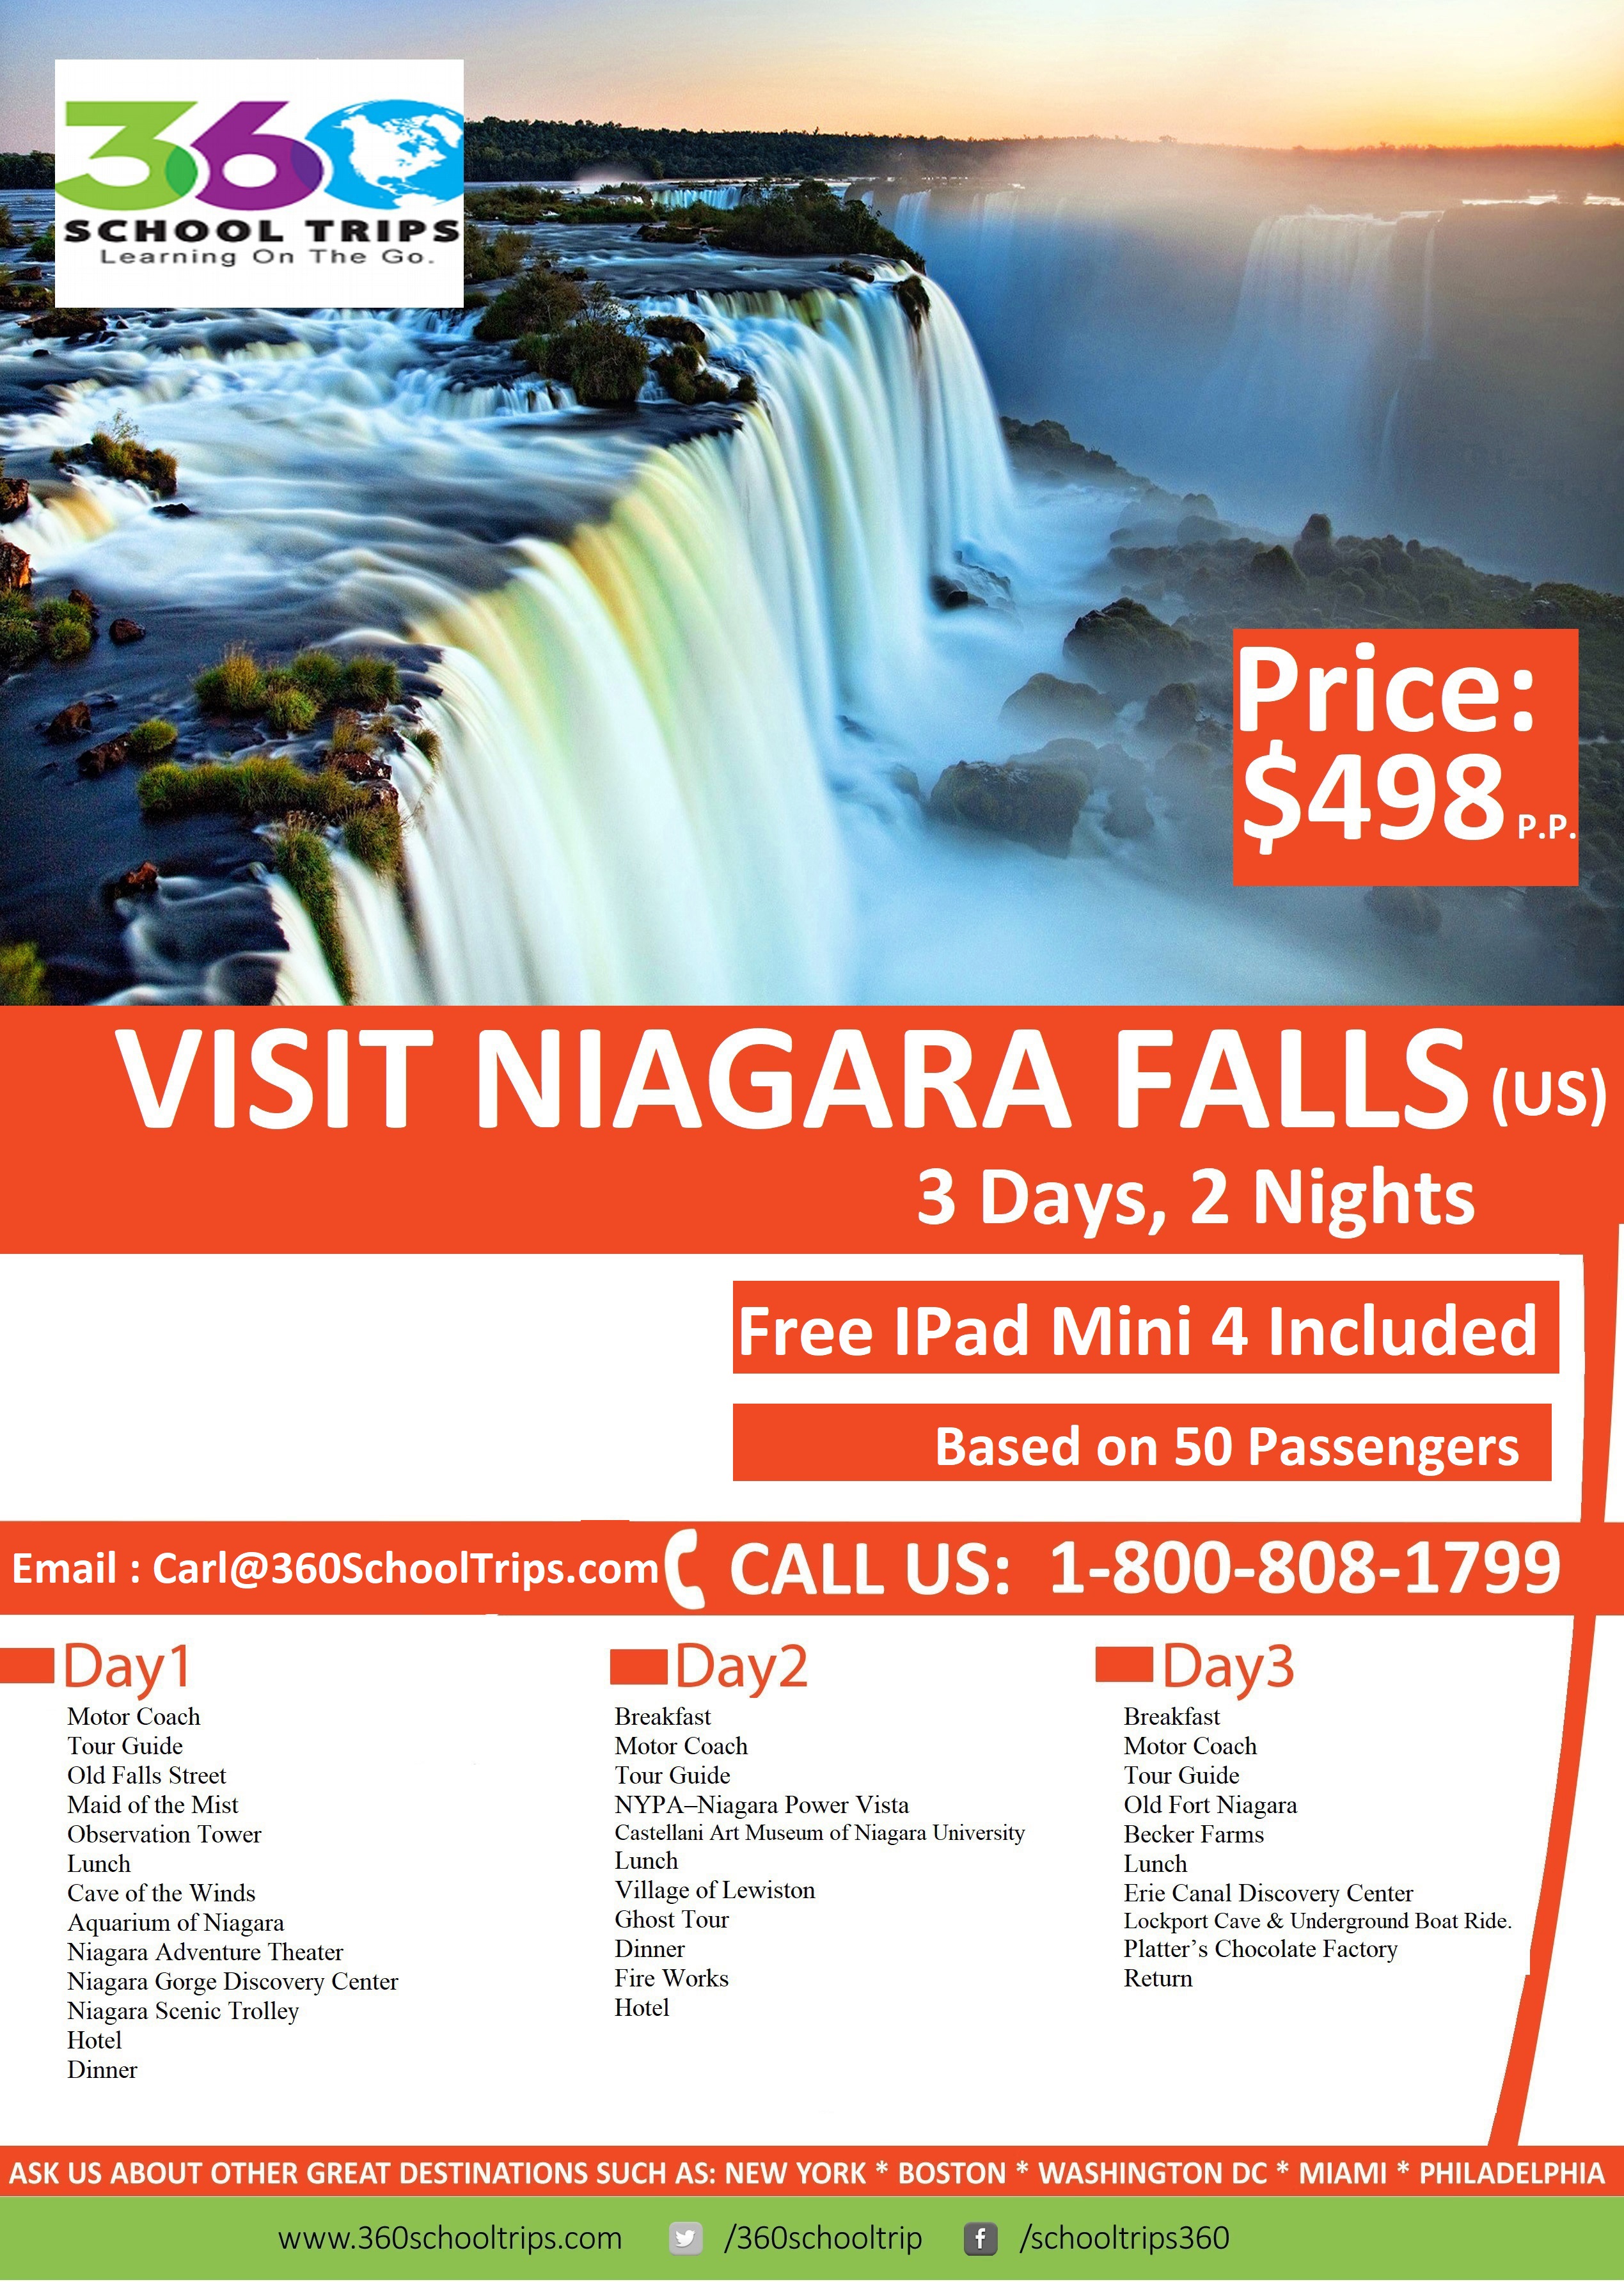 Visit Niagara Falls (US) and Win Free IPad Mini 4